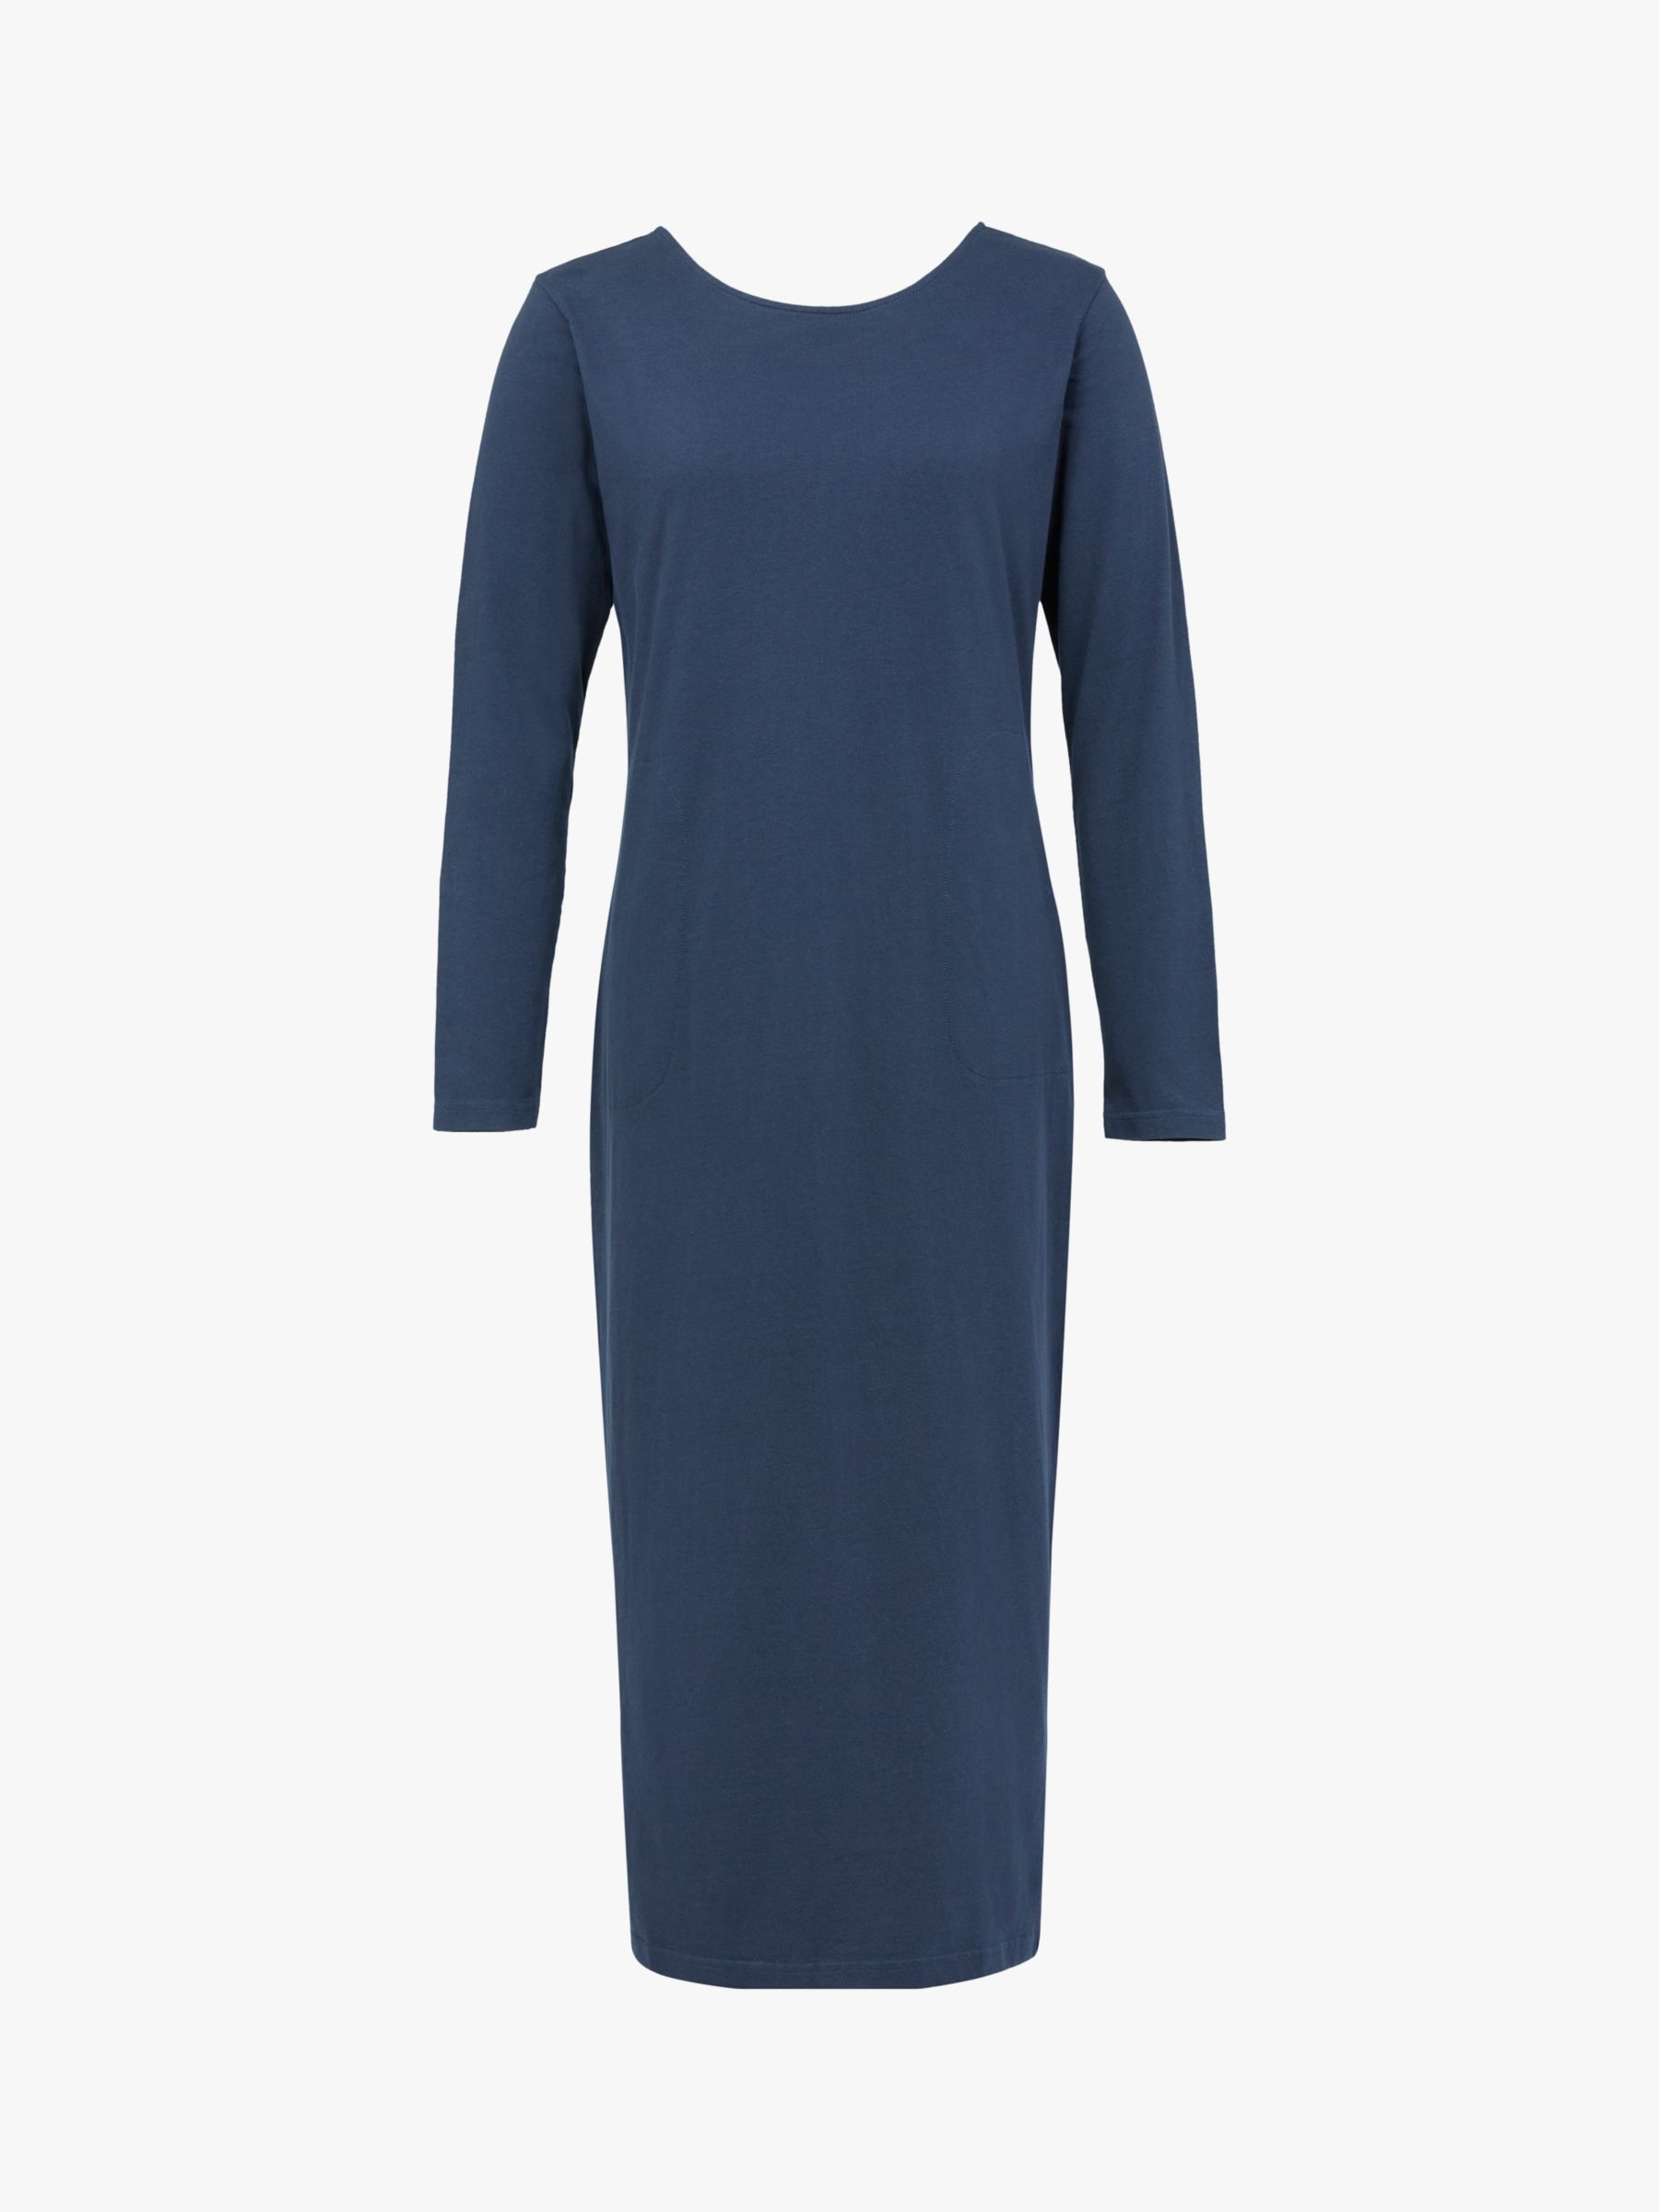 Celtic & Co. Scoop Back Midi Dress, Dark Navy at John Lewis & Partners